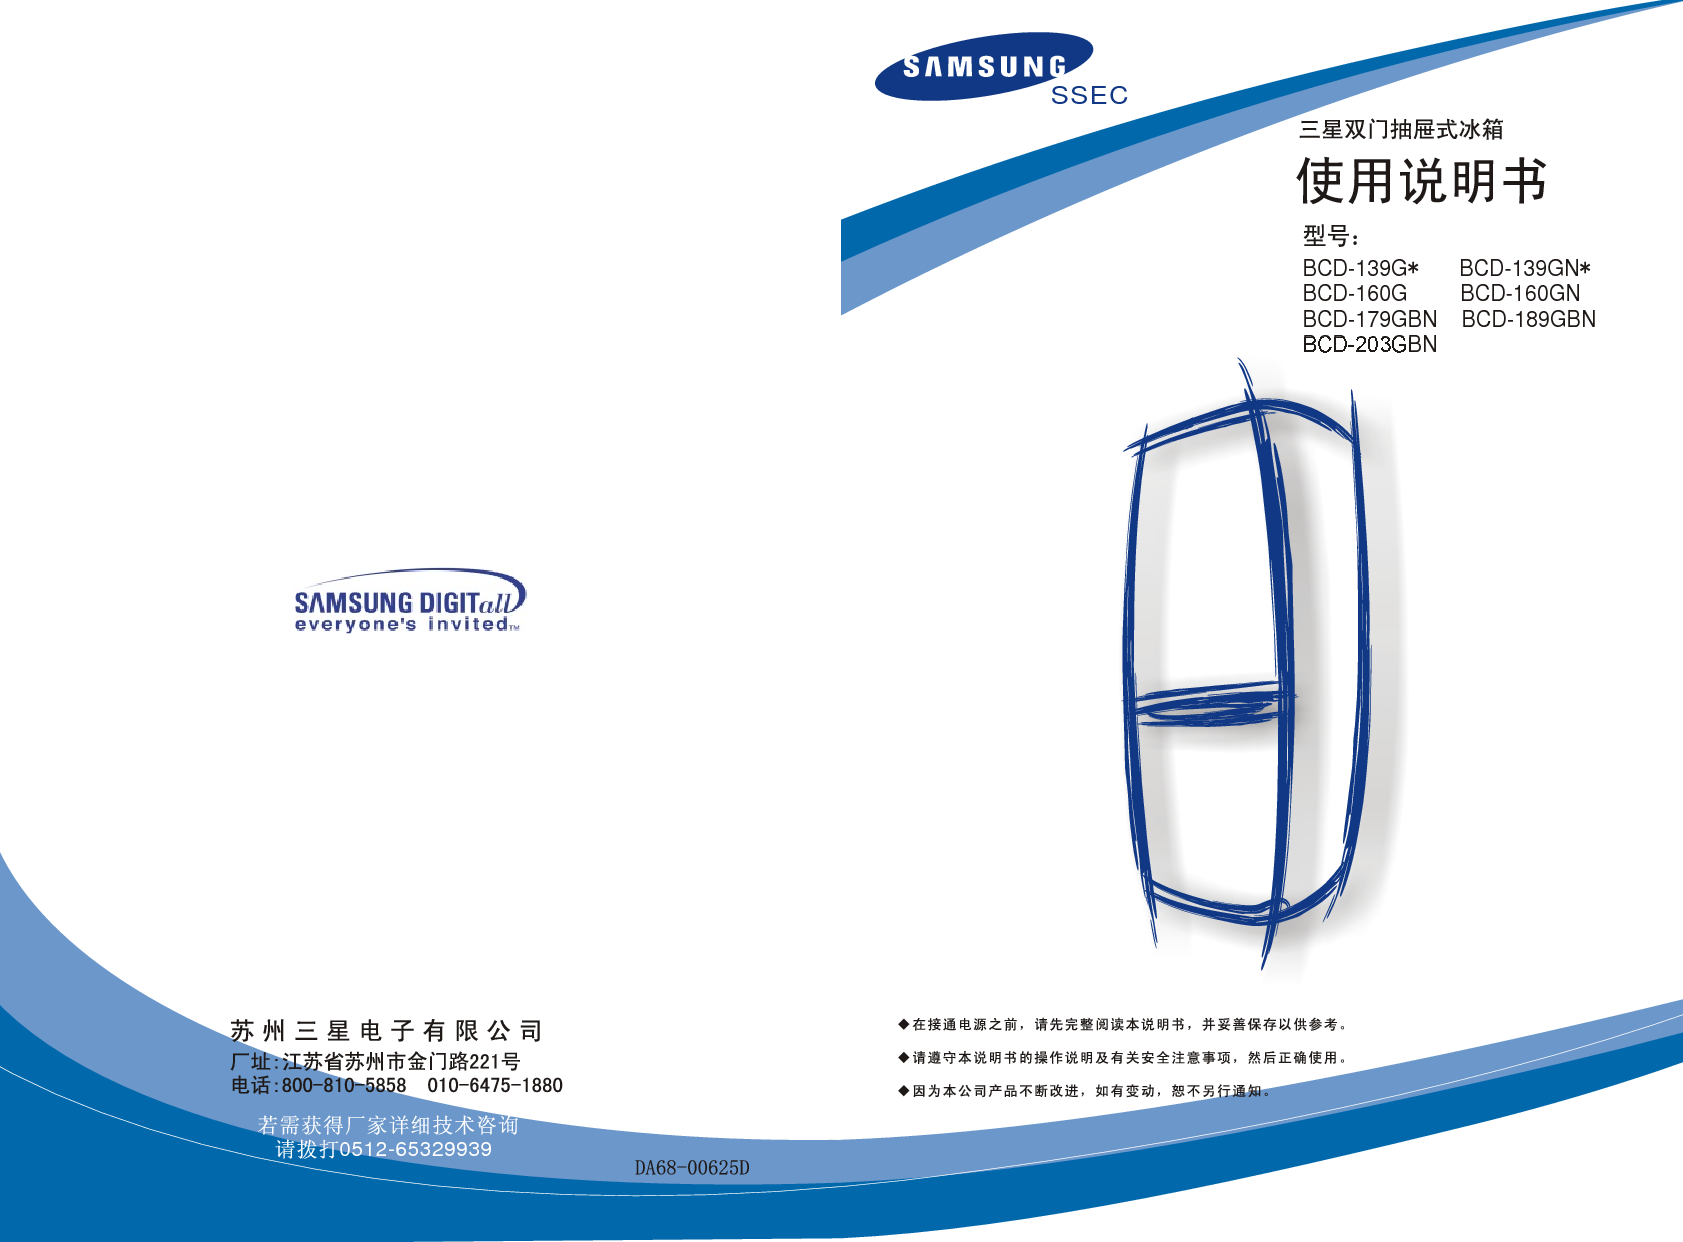 三星 Samsung BCD-139G*, BCD-203GBN 使用说明书 封面